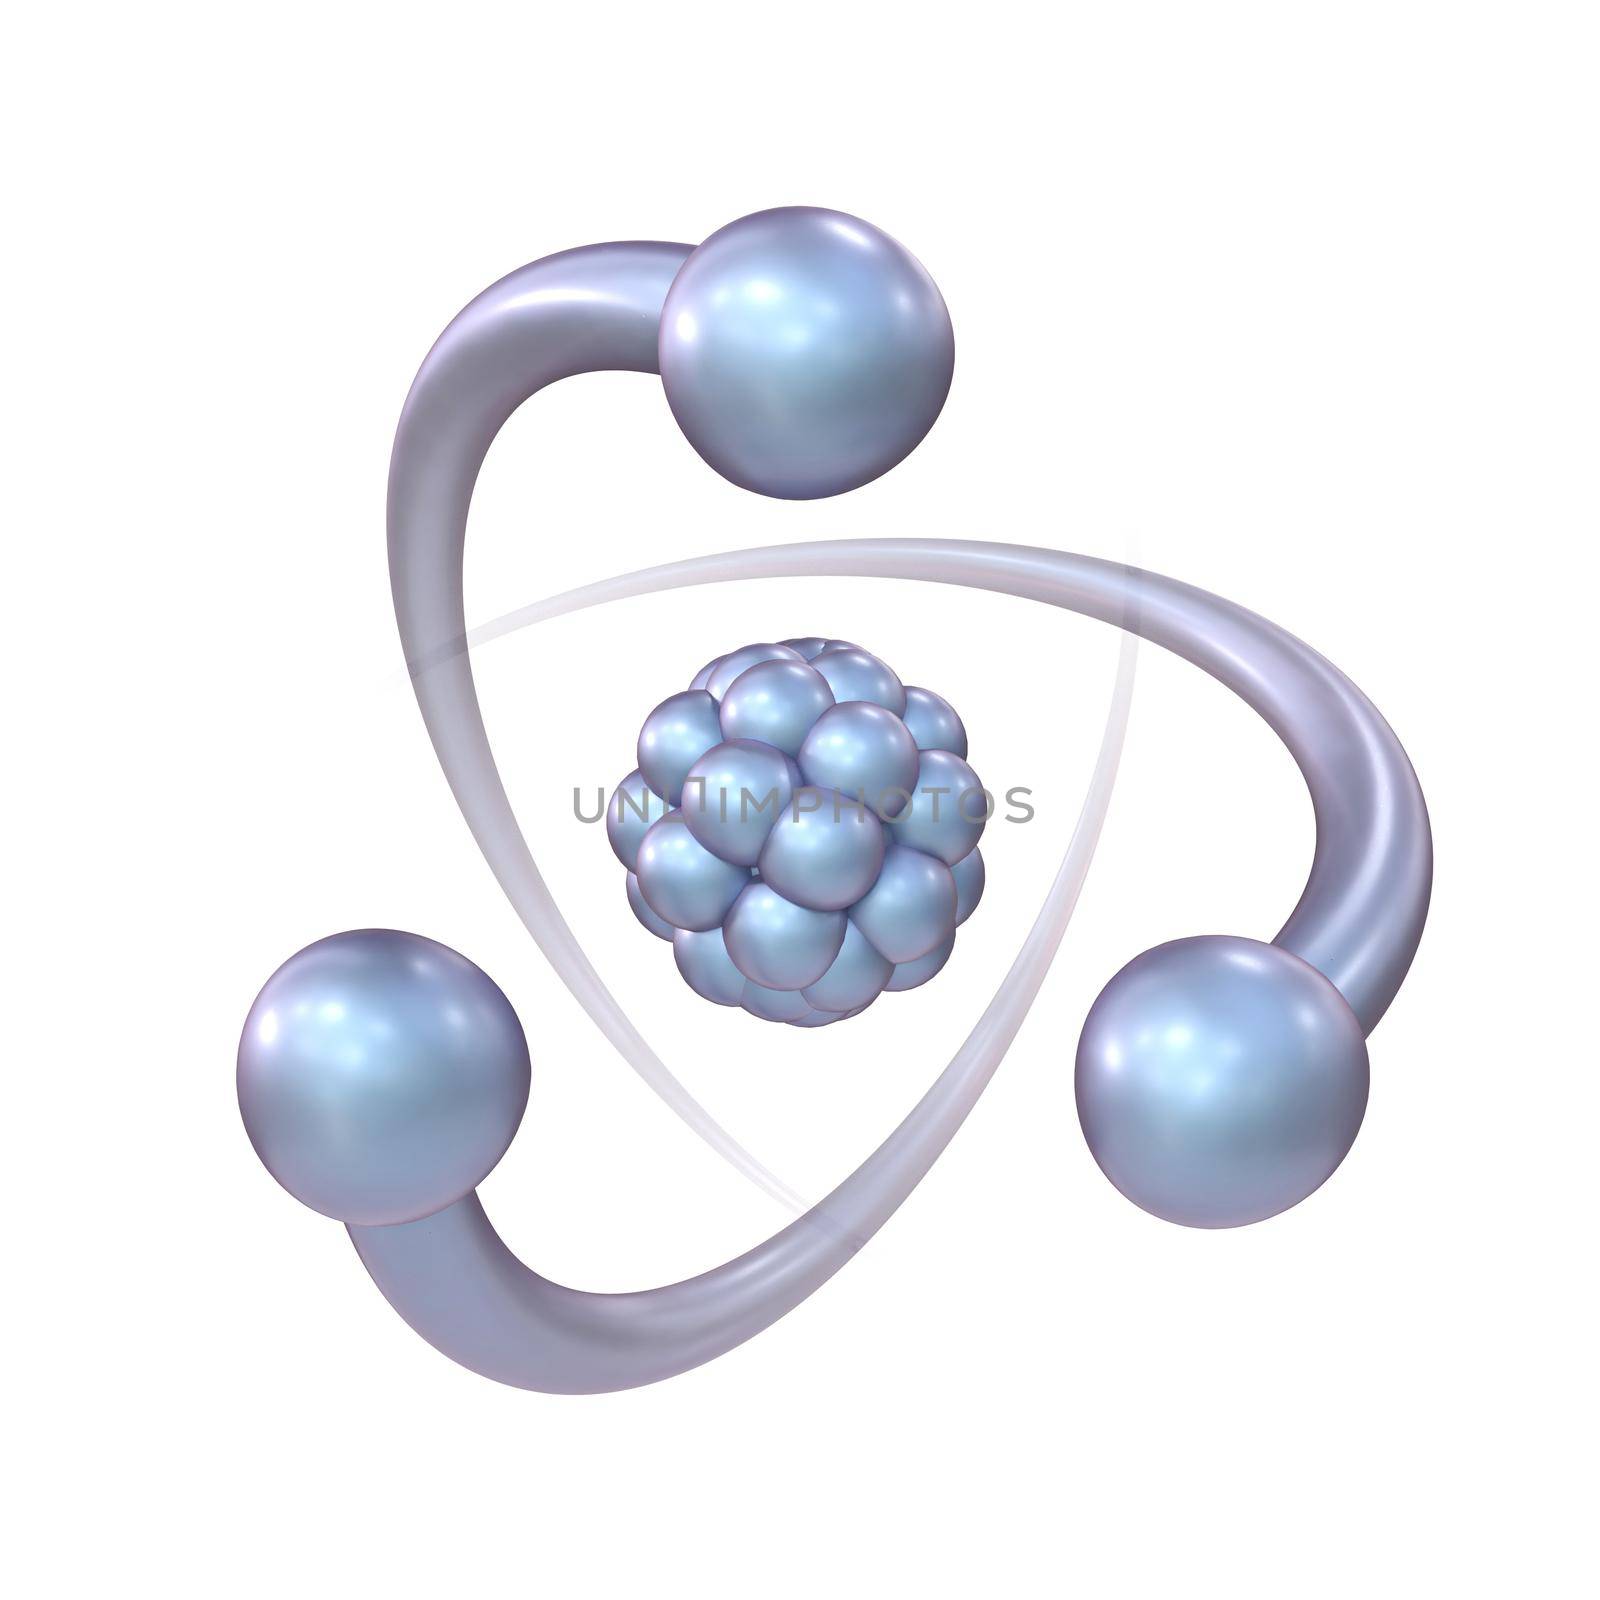 Blue violet atom sign 3D rendering illustration isolated on white background